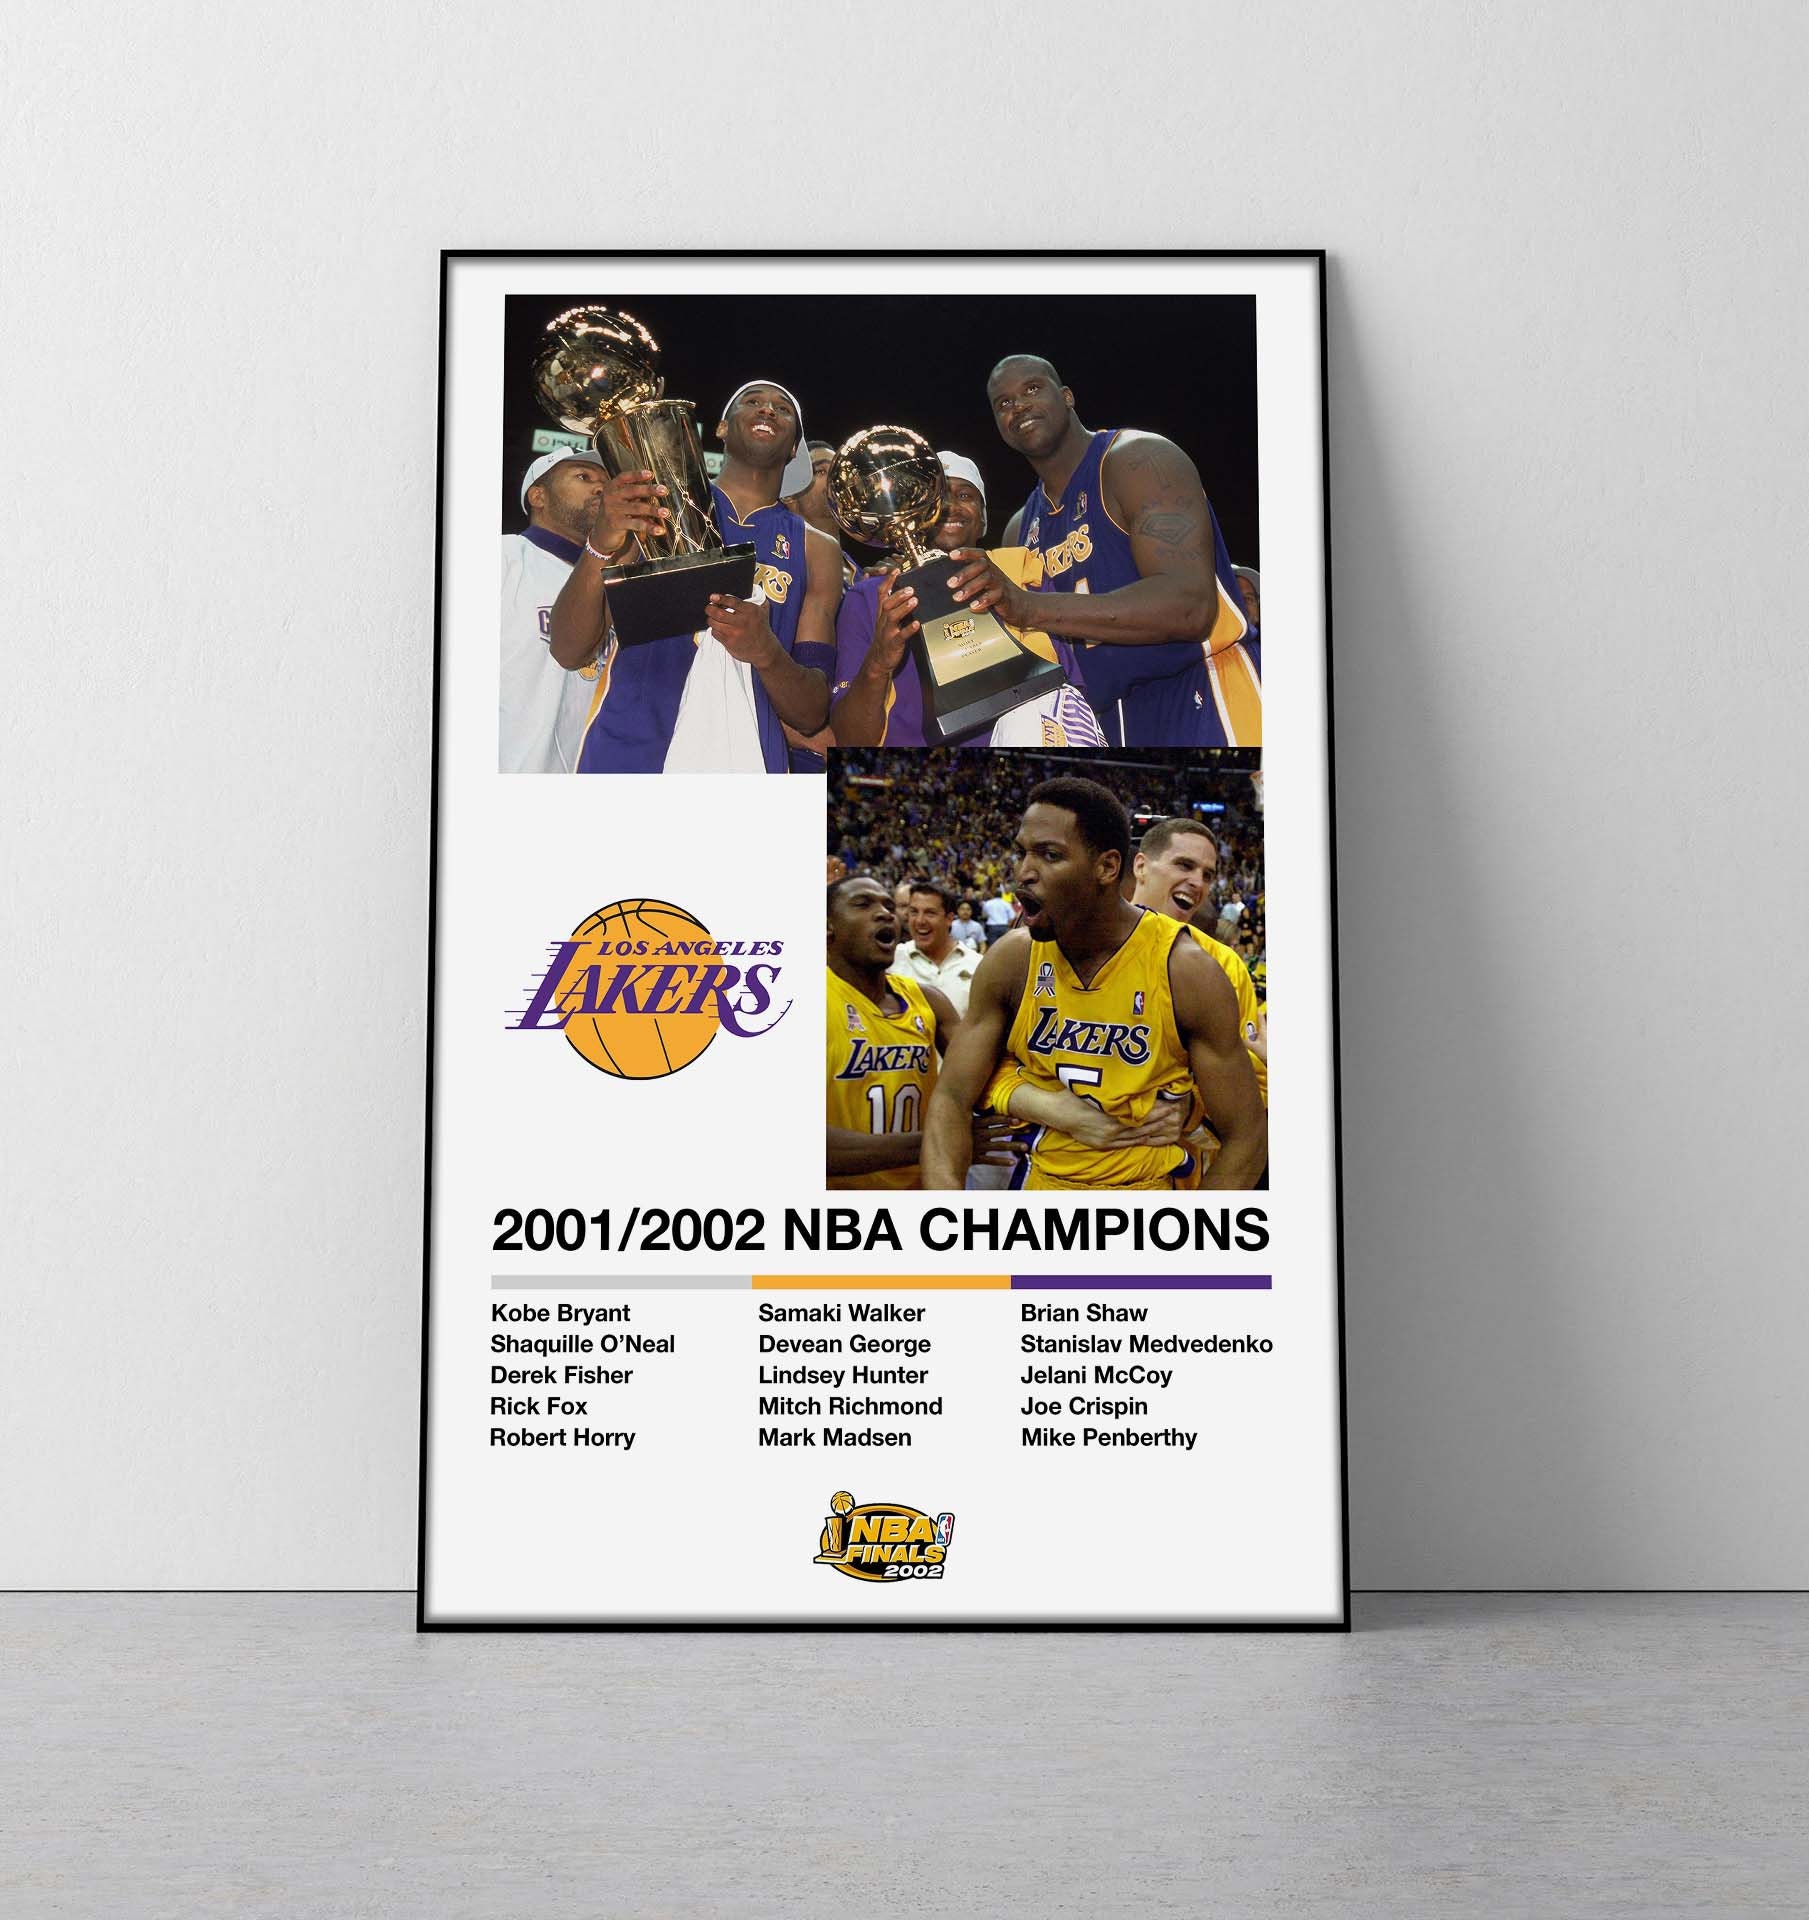 NBA Trophy Sticker Championship Trophy - 3.75 tall - Free Shipping